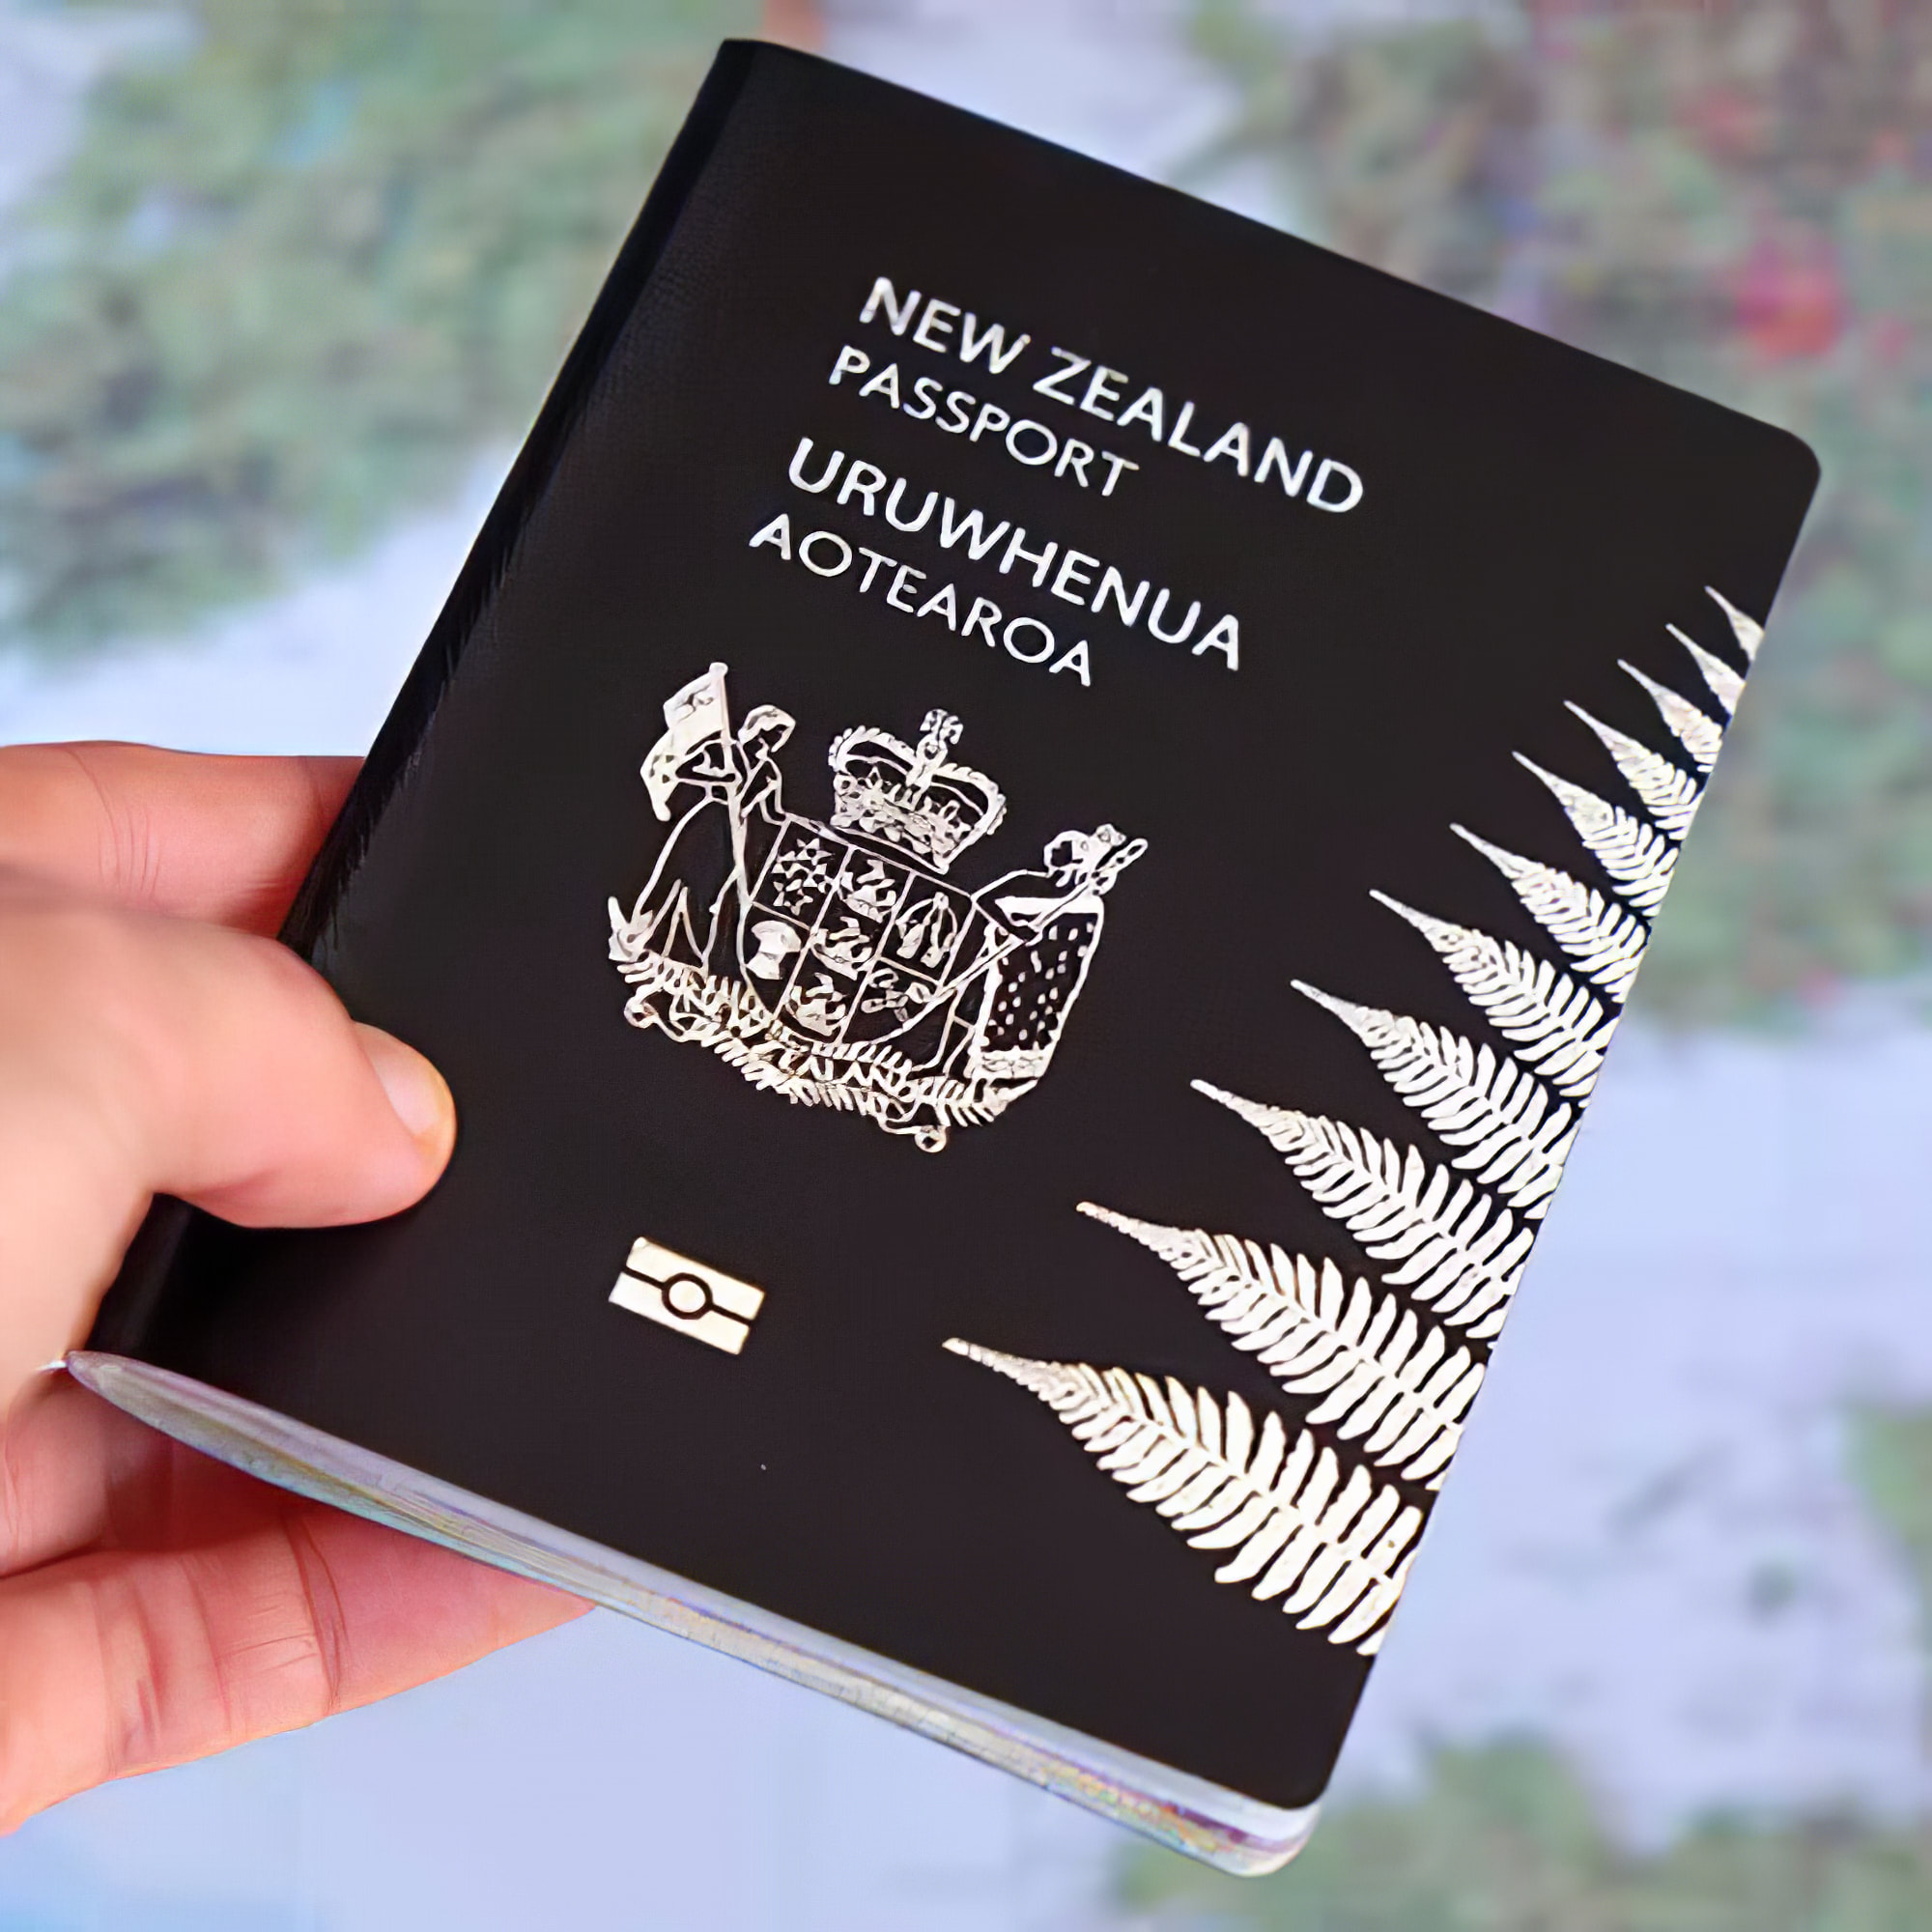 nz passport holder travelling to usa